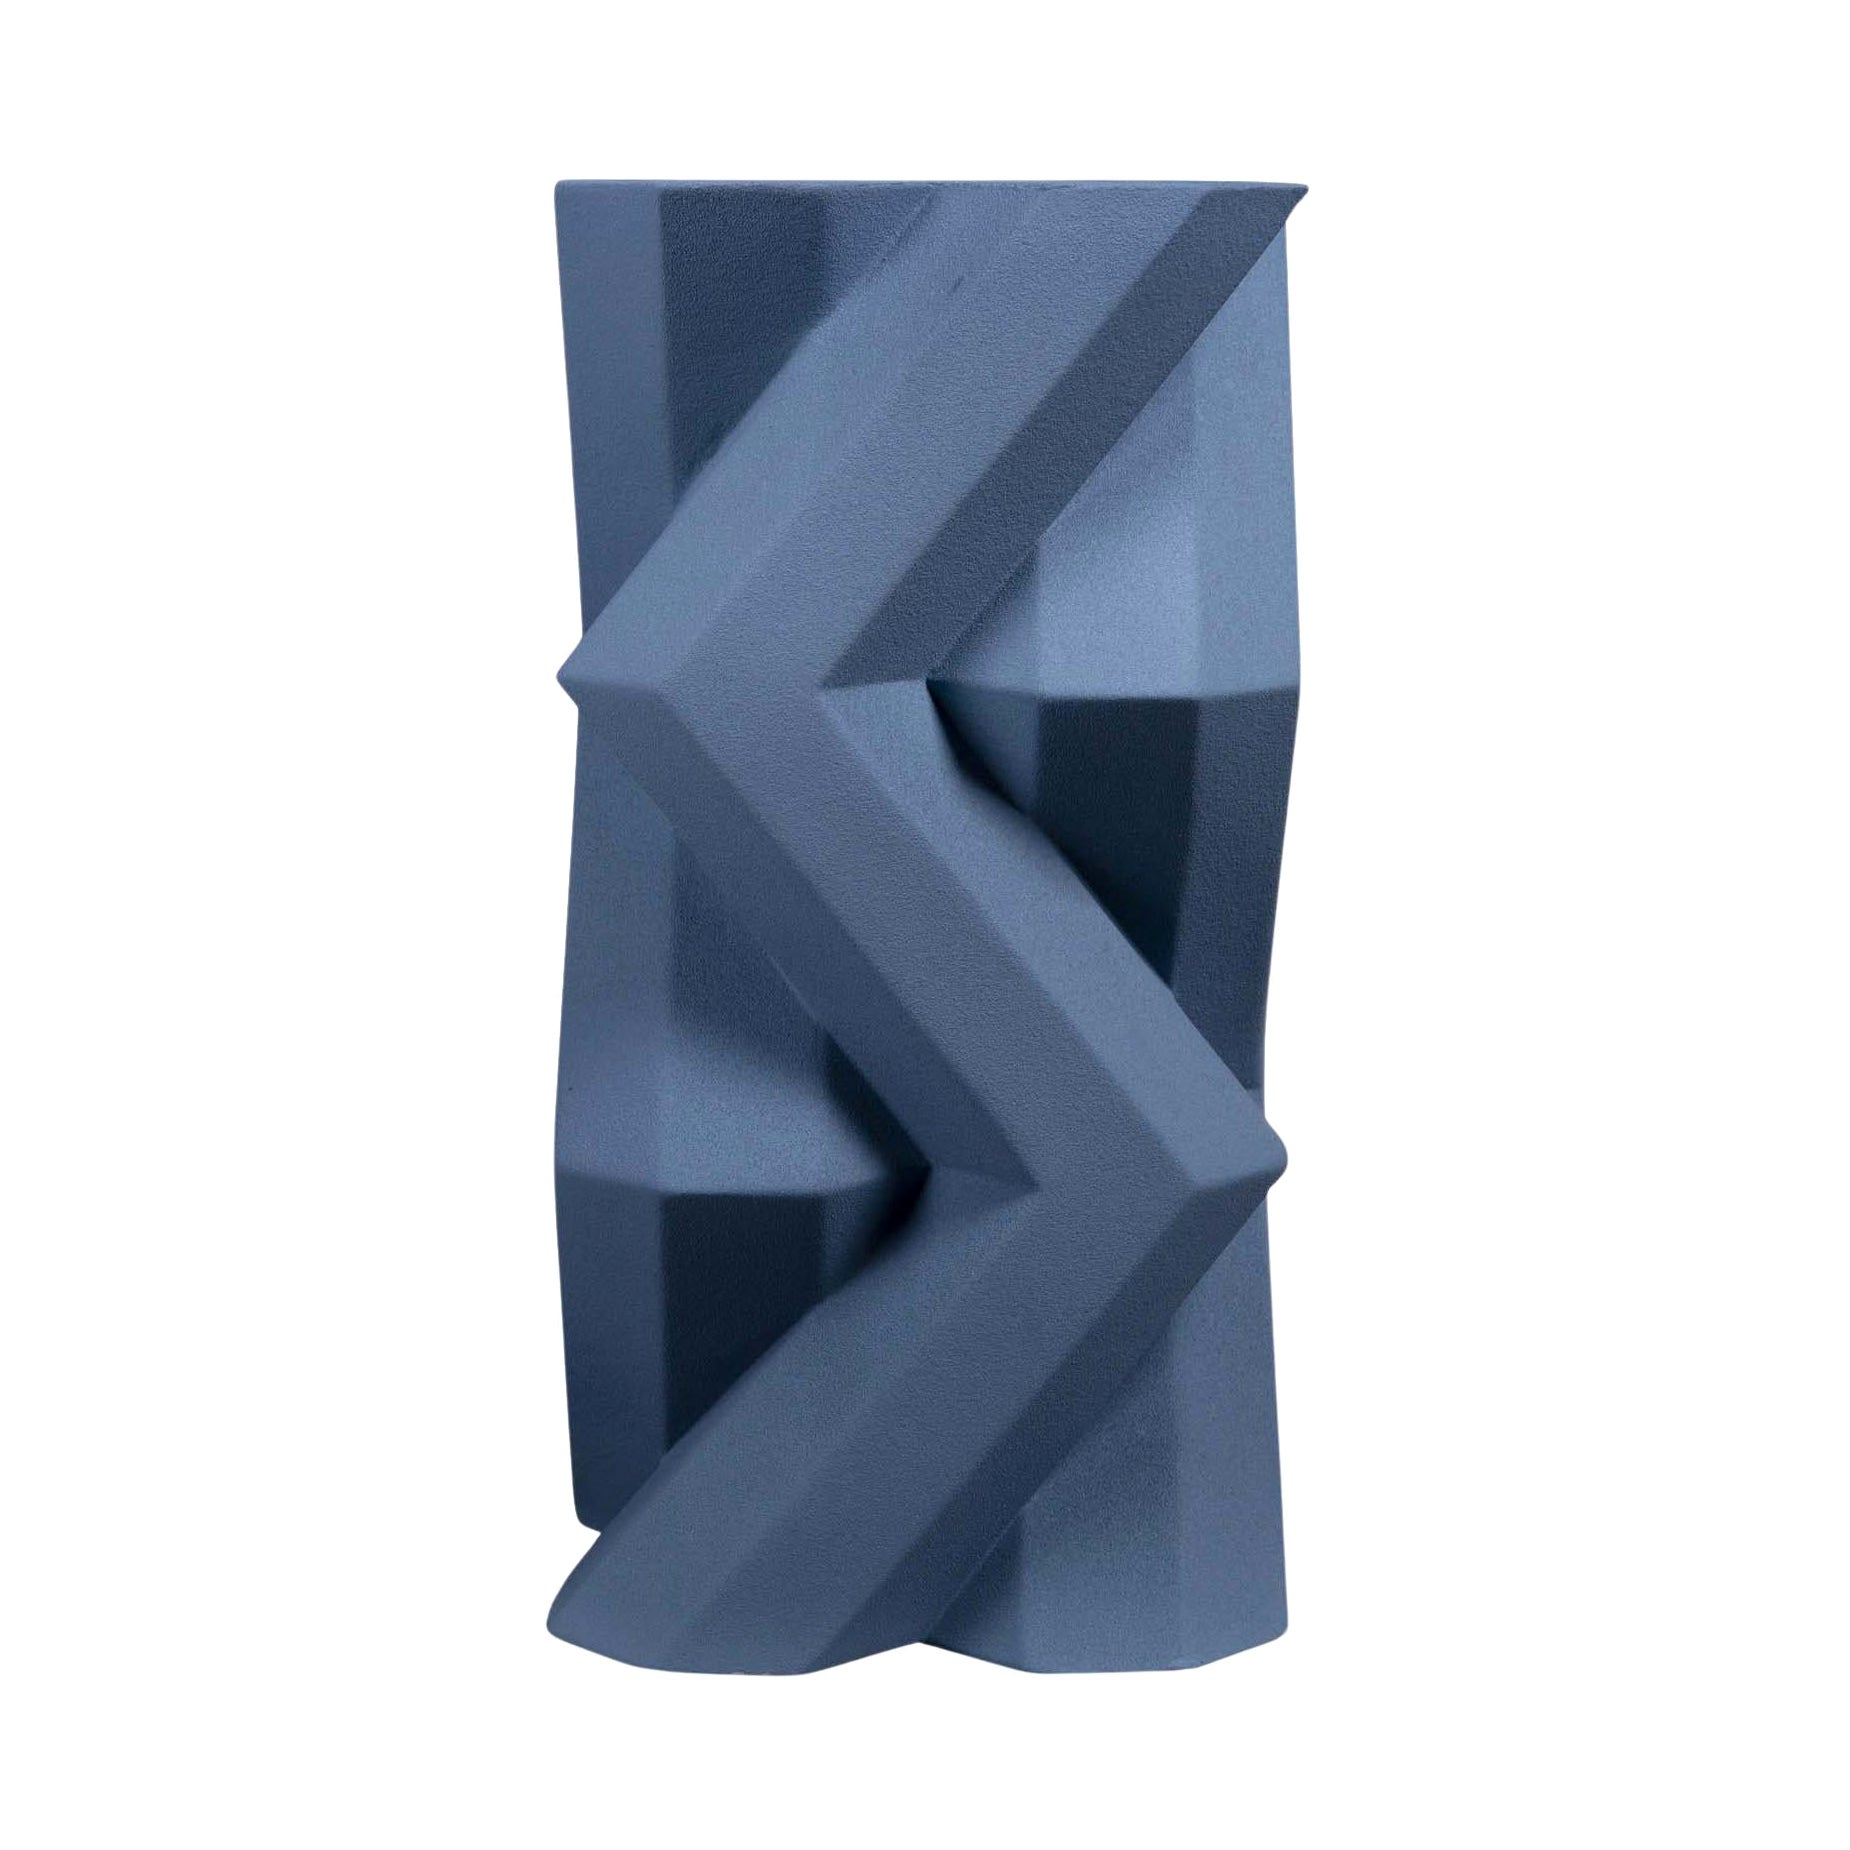 Fortress Tower Vase by Lara Bohinc Blue Ceramic Geometric Contemporary, in Stock